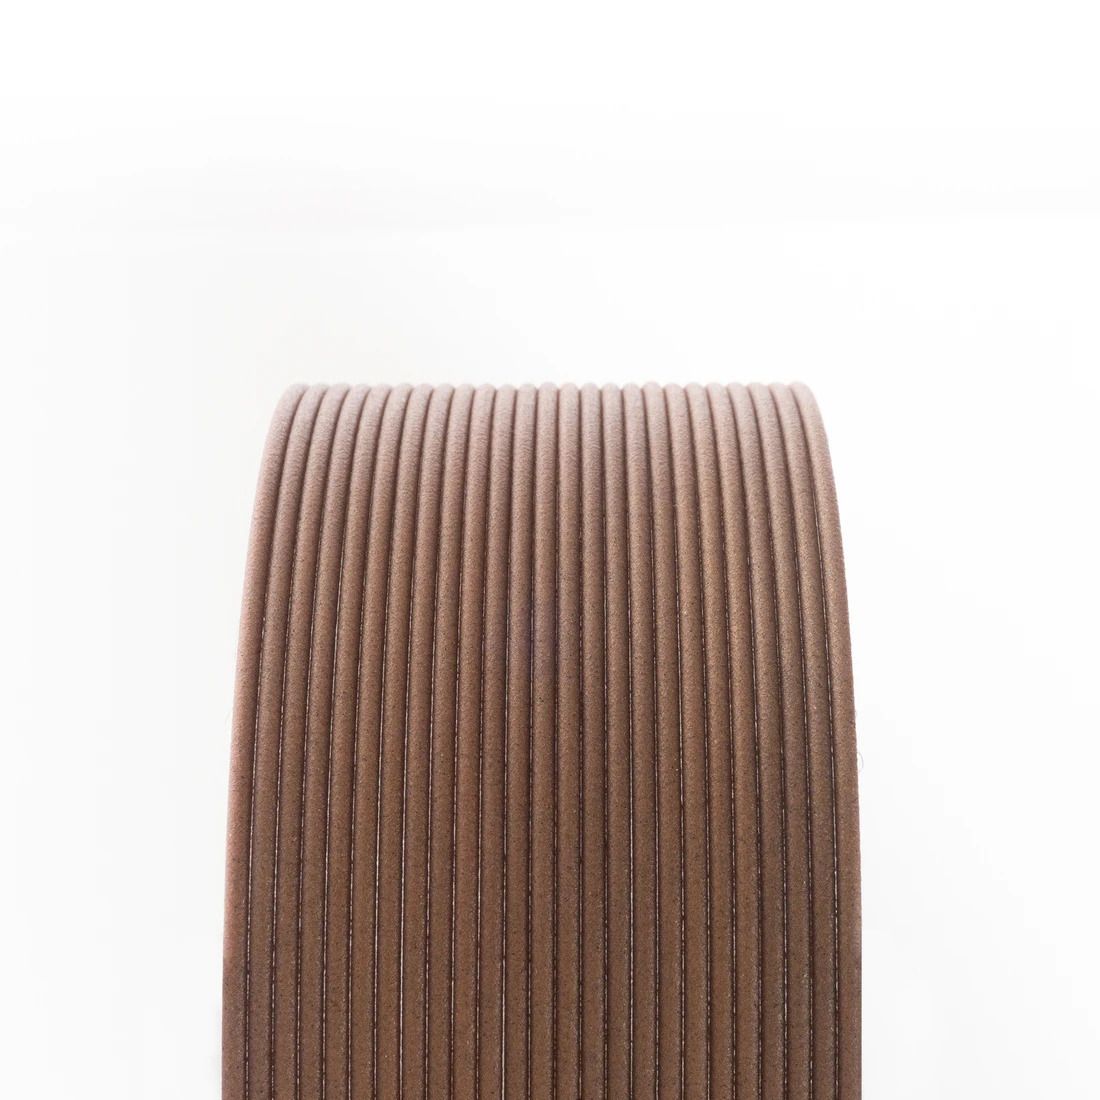 Matte Fiber HTPLA Chestnut Wood 1.75mm 500gms 3D printing filament